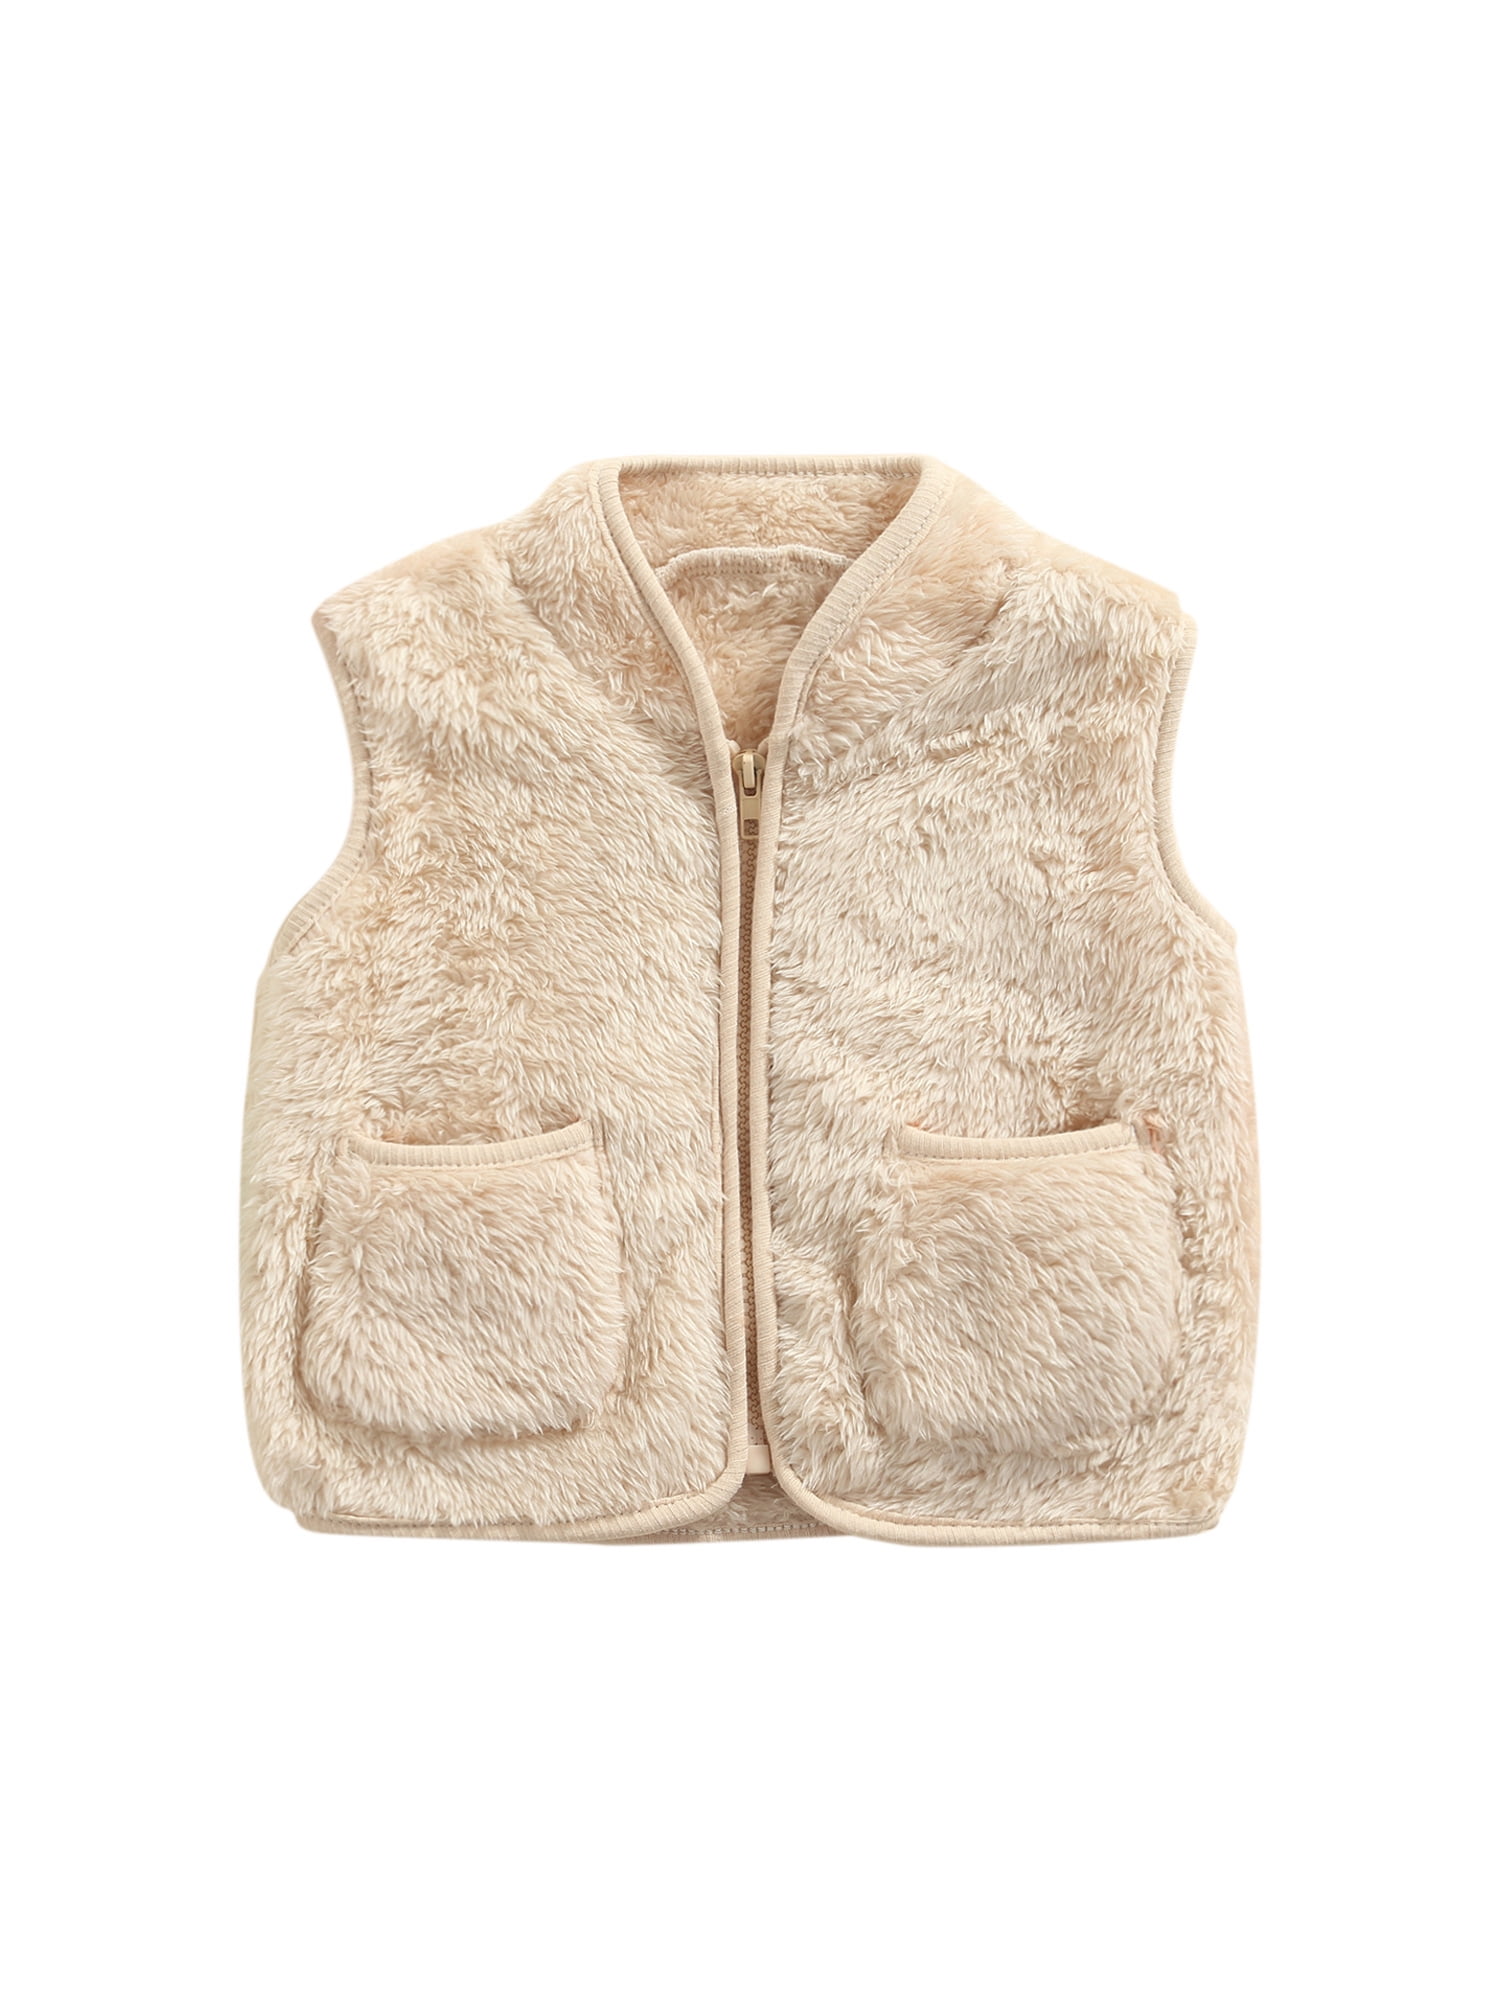 LittleSpring Kids Fleece Vest Jacket Full-Zip Warm Sleeveless 